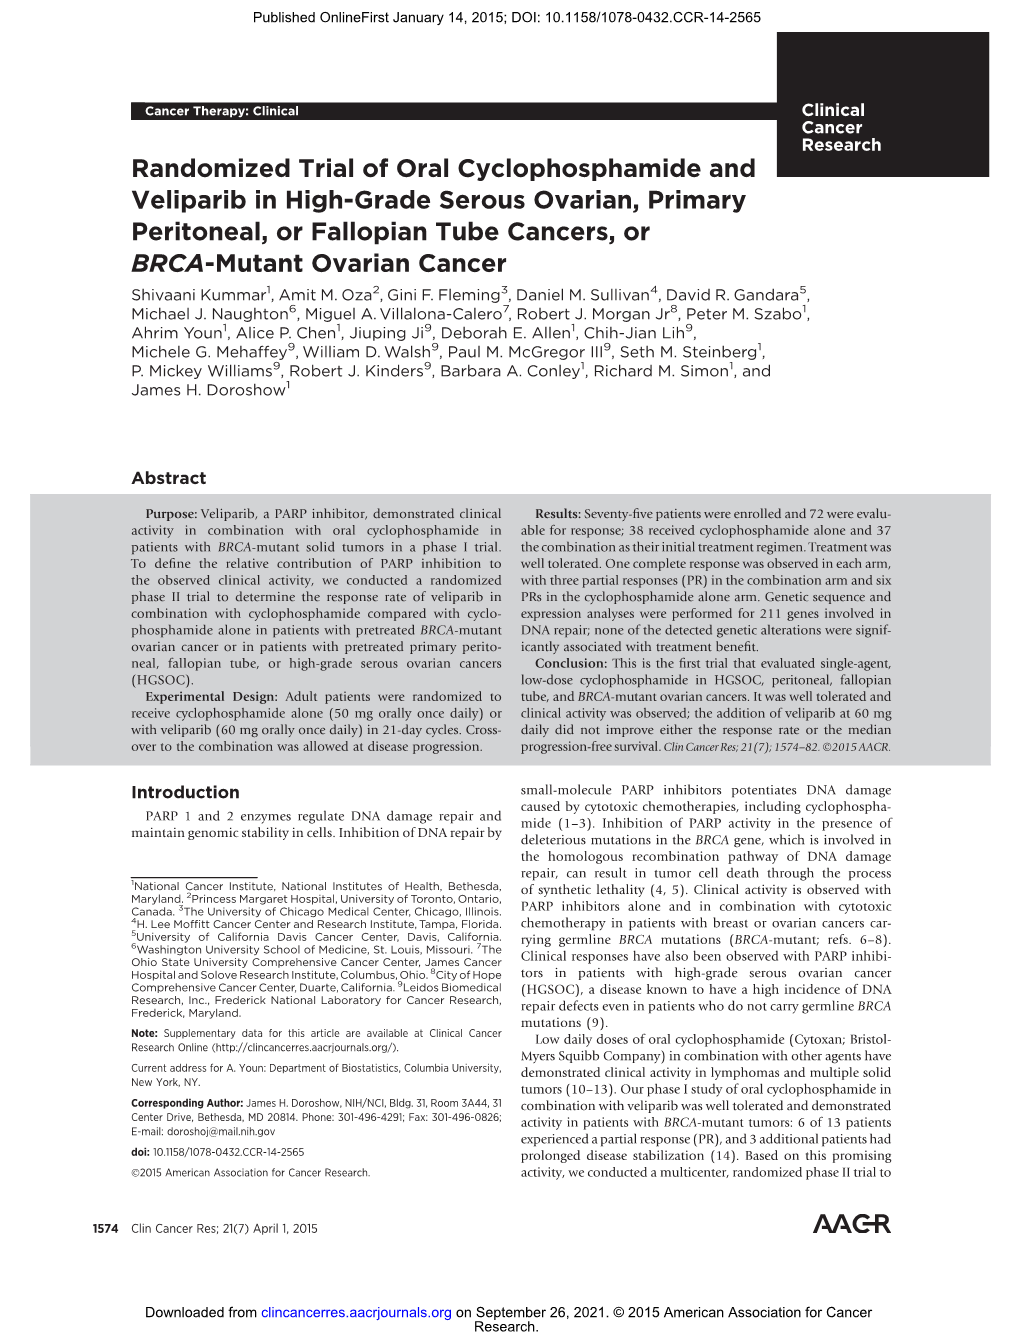 Randomized Trial of Oral Cyclophosphamide and Veliparib In